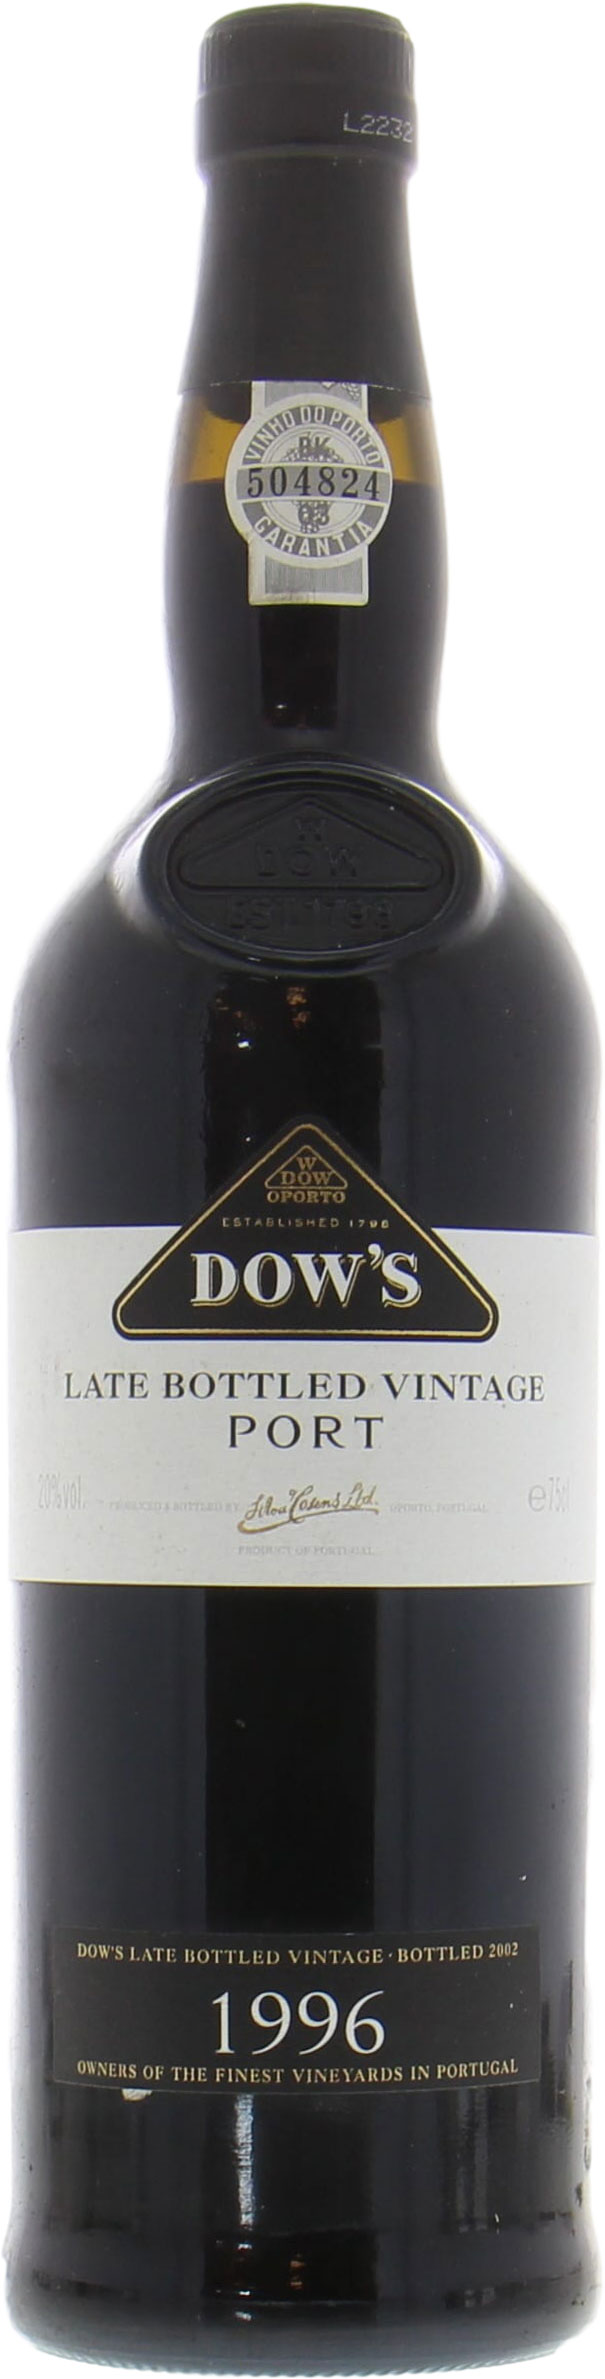 Dow's - Late Bottled Vintage Port 1996